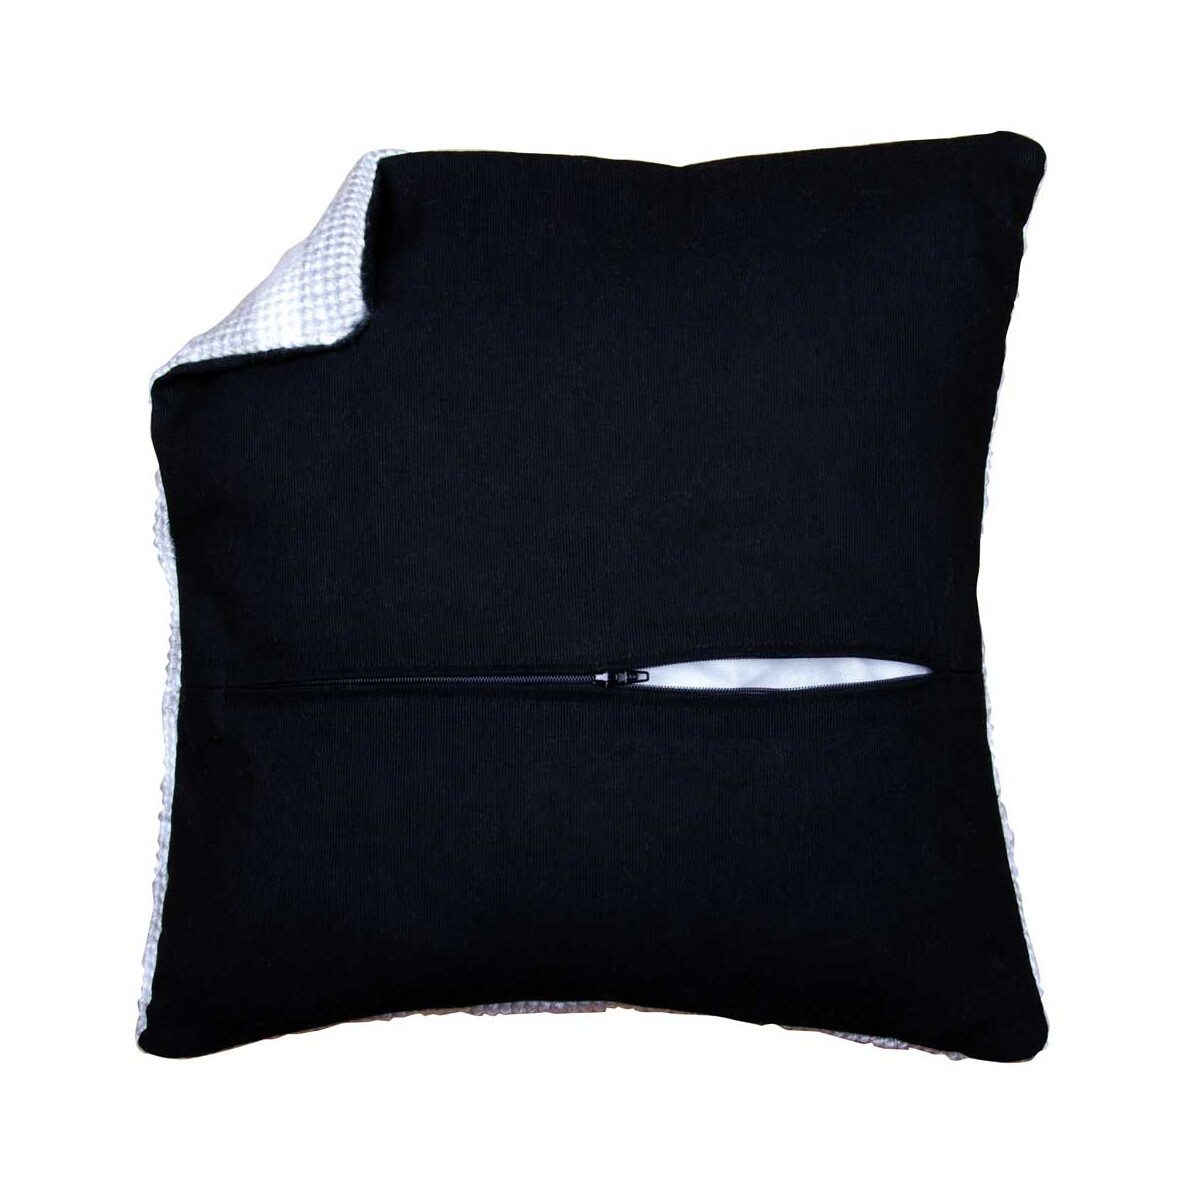 Vervaco Cushion Back with Zipper - Black, 45 x 45 cm, DIY